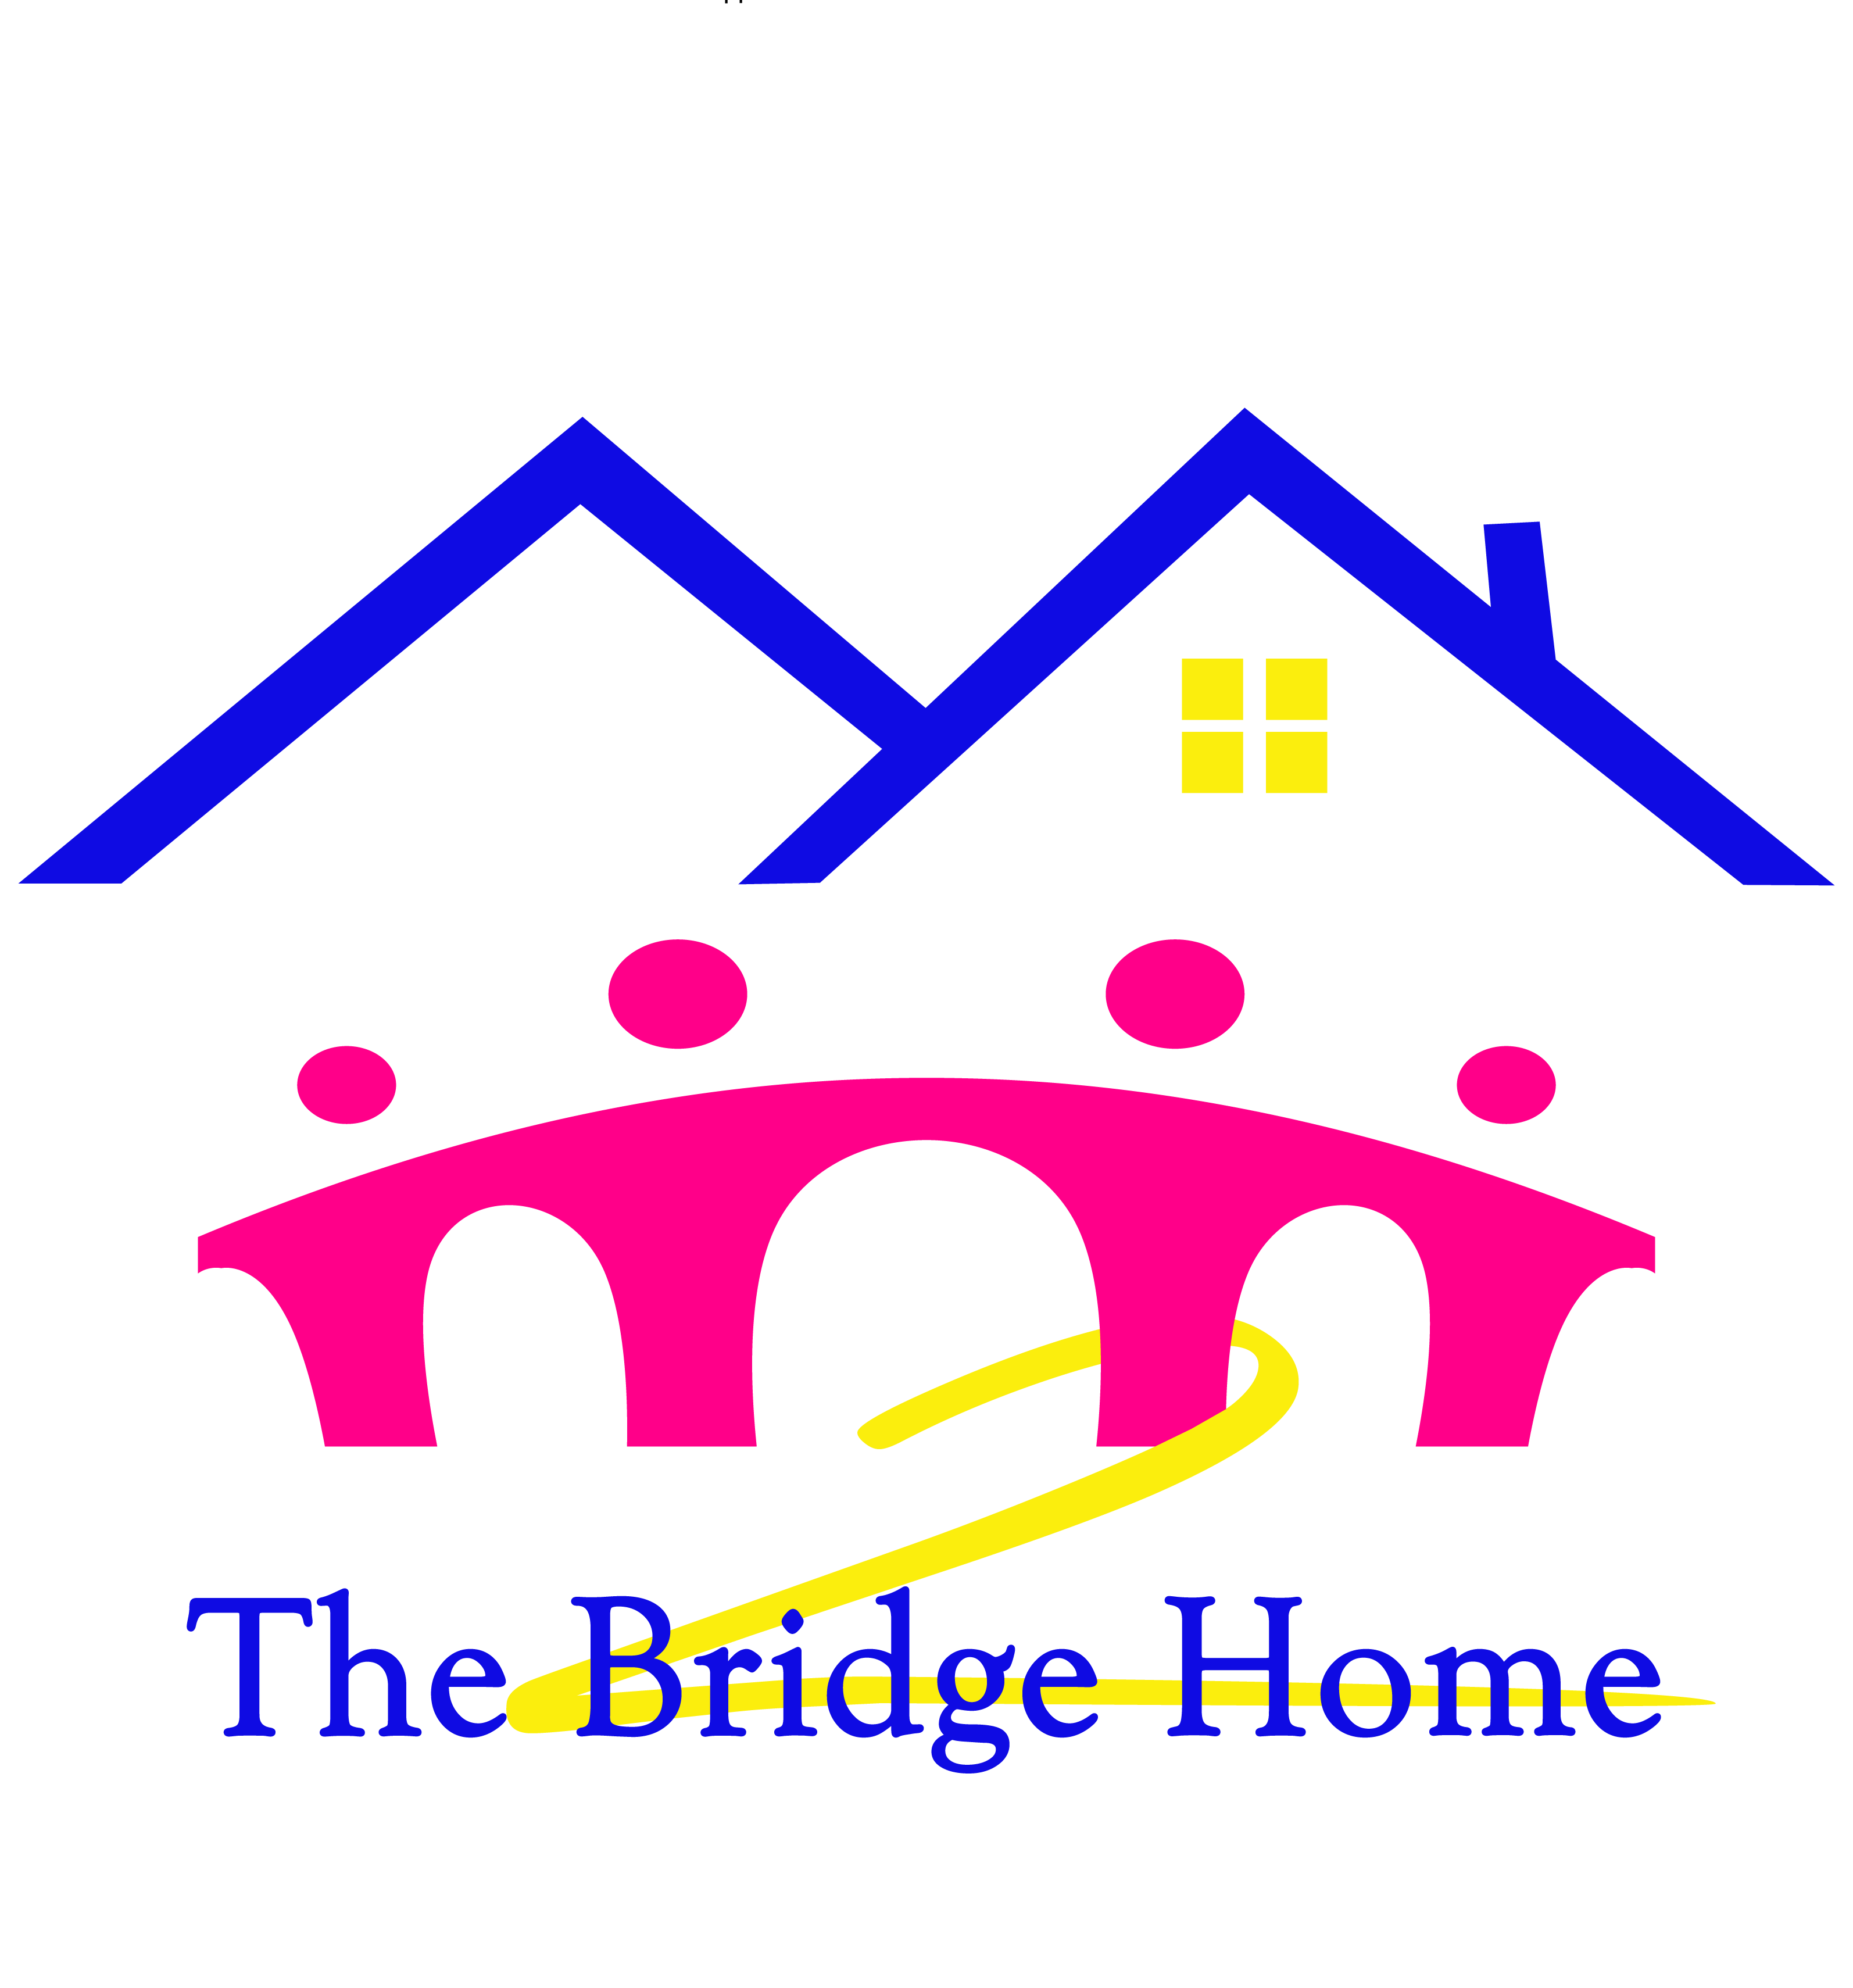 The Bridge 2 Home logo